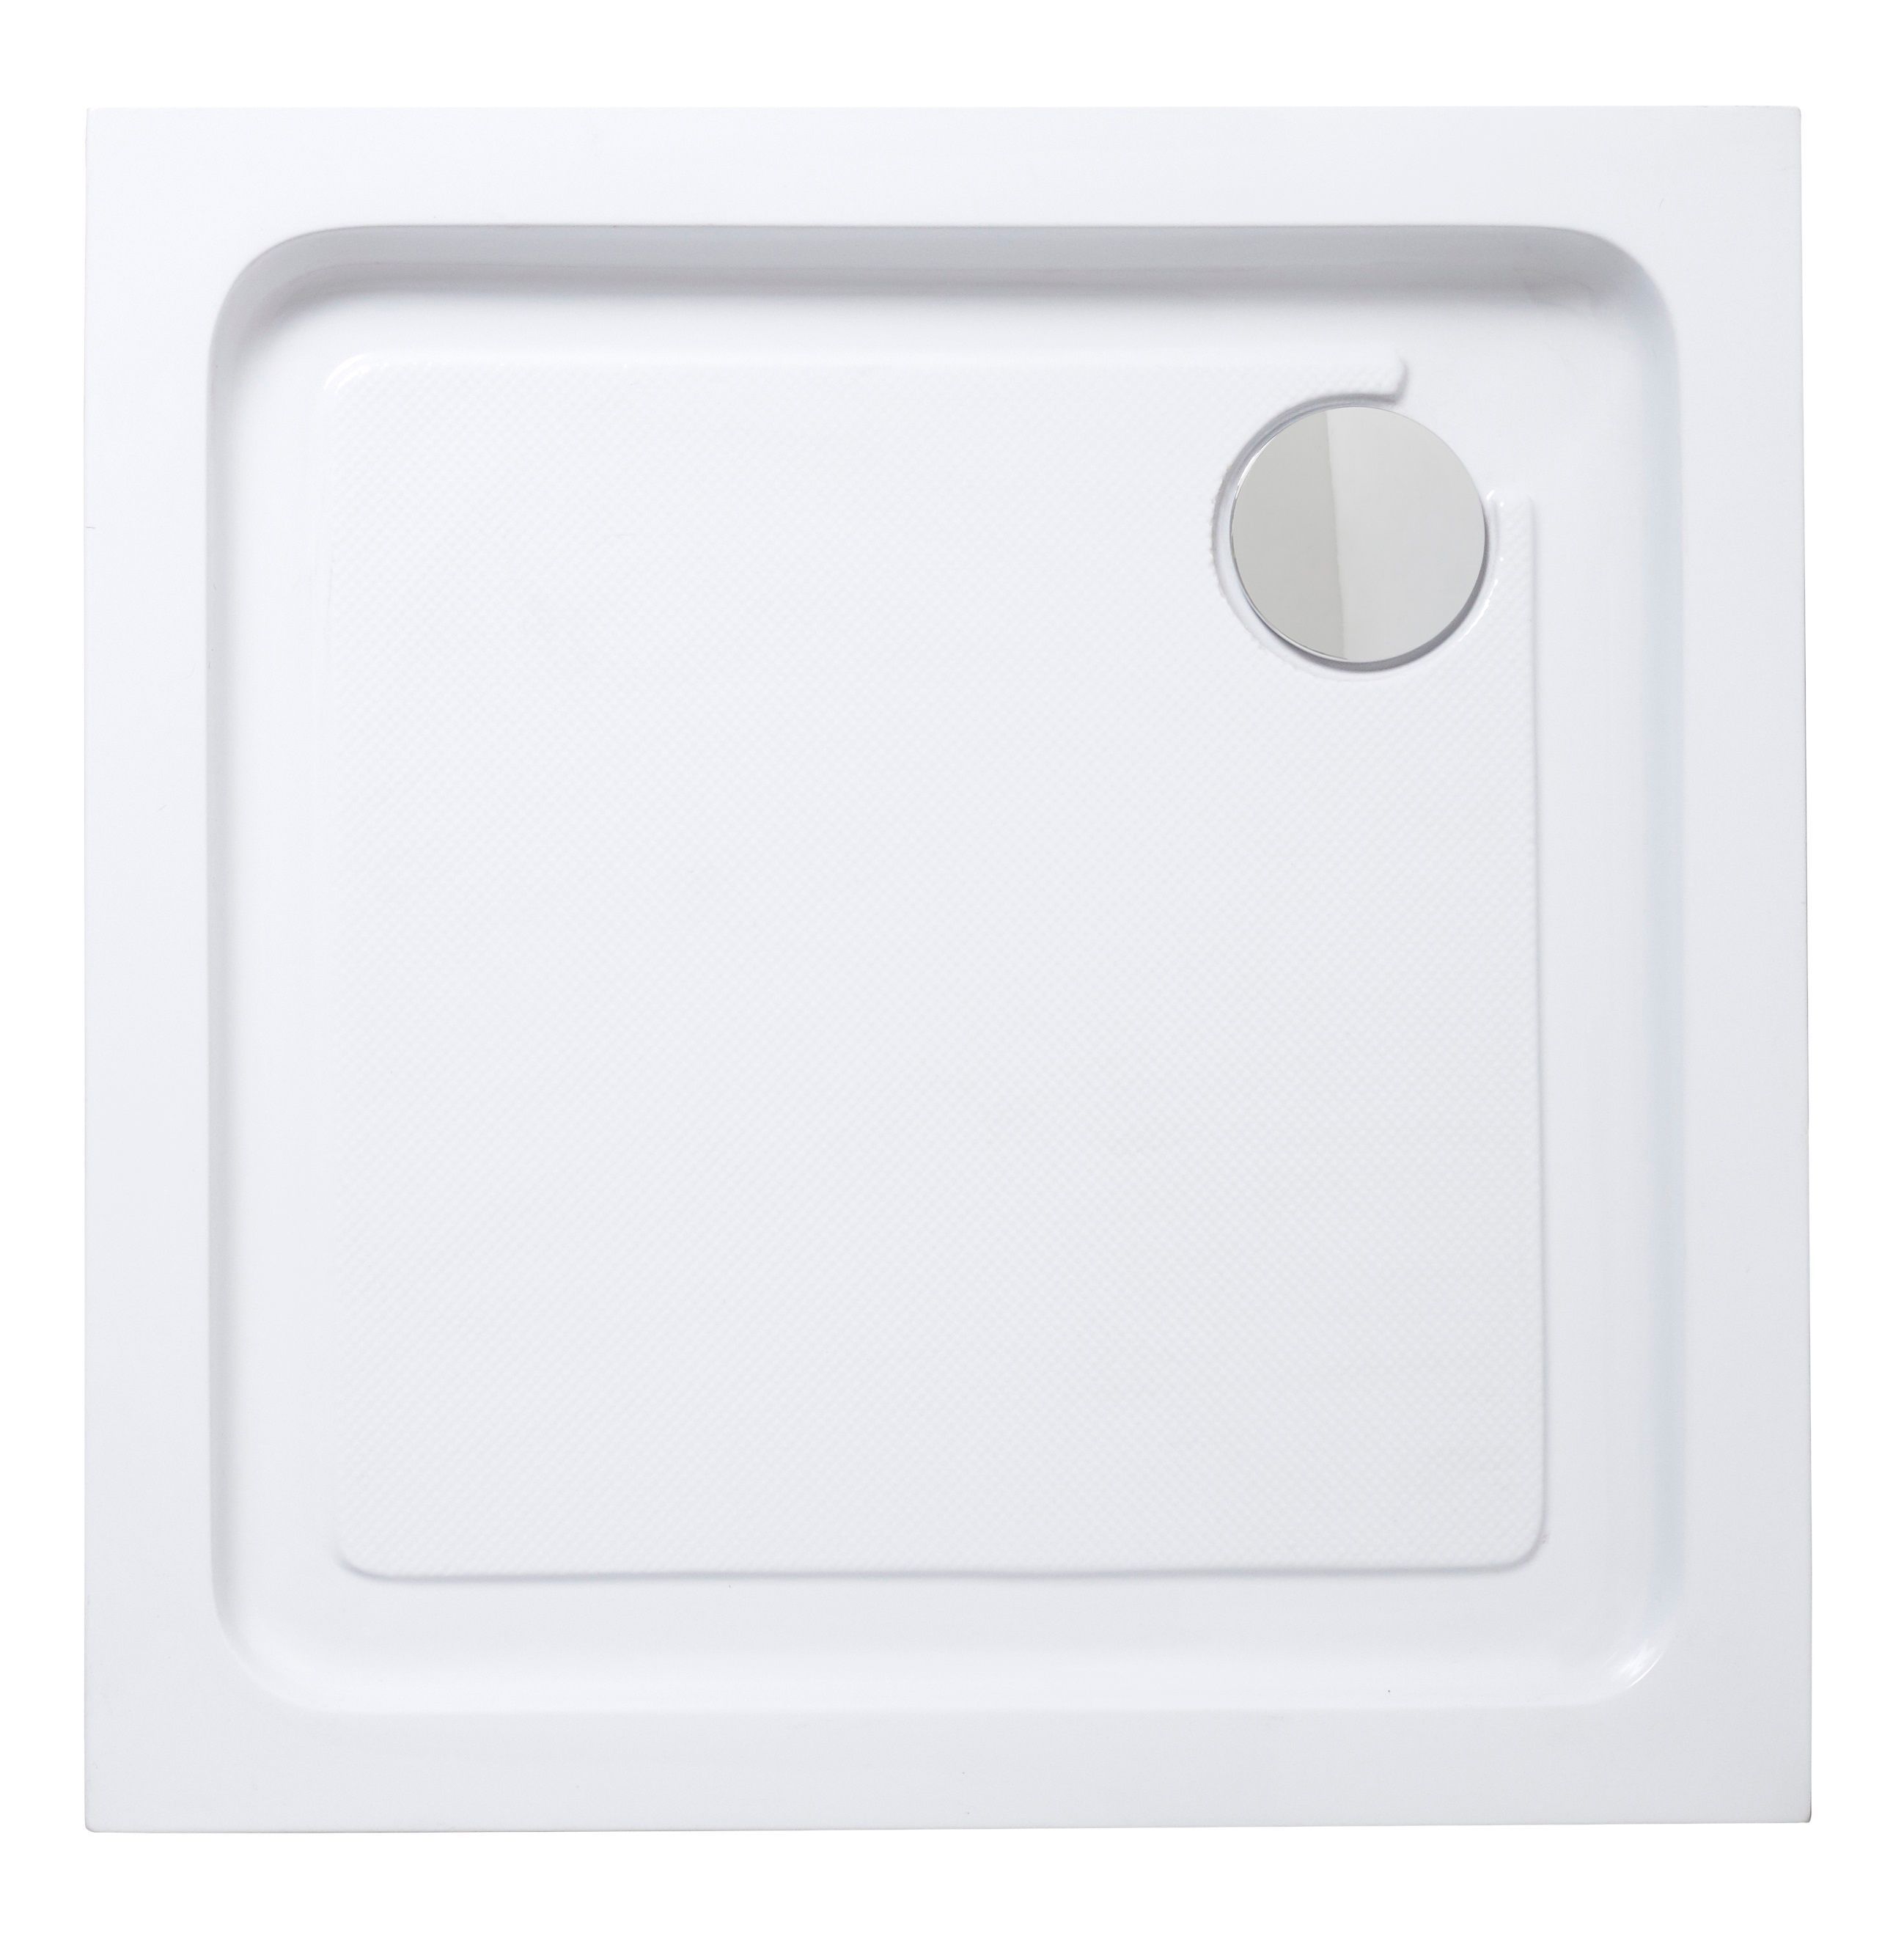 Cooke & Lewis Lagan Gloss White Square Shower tray (L)80cm (W)80cm (H)15cm